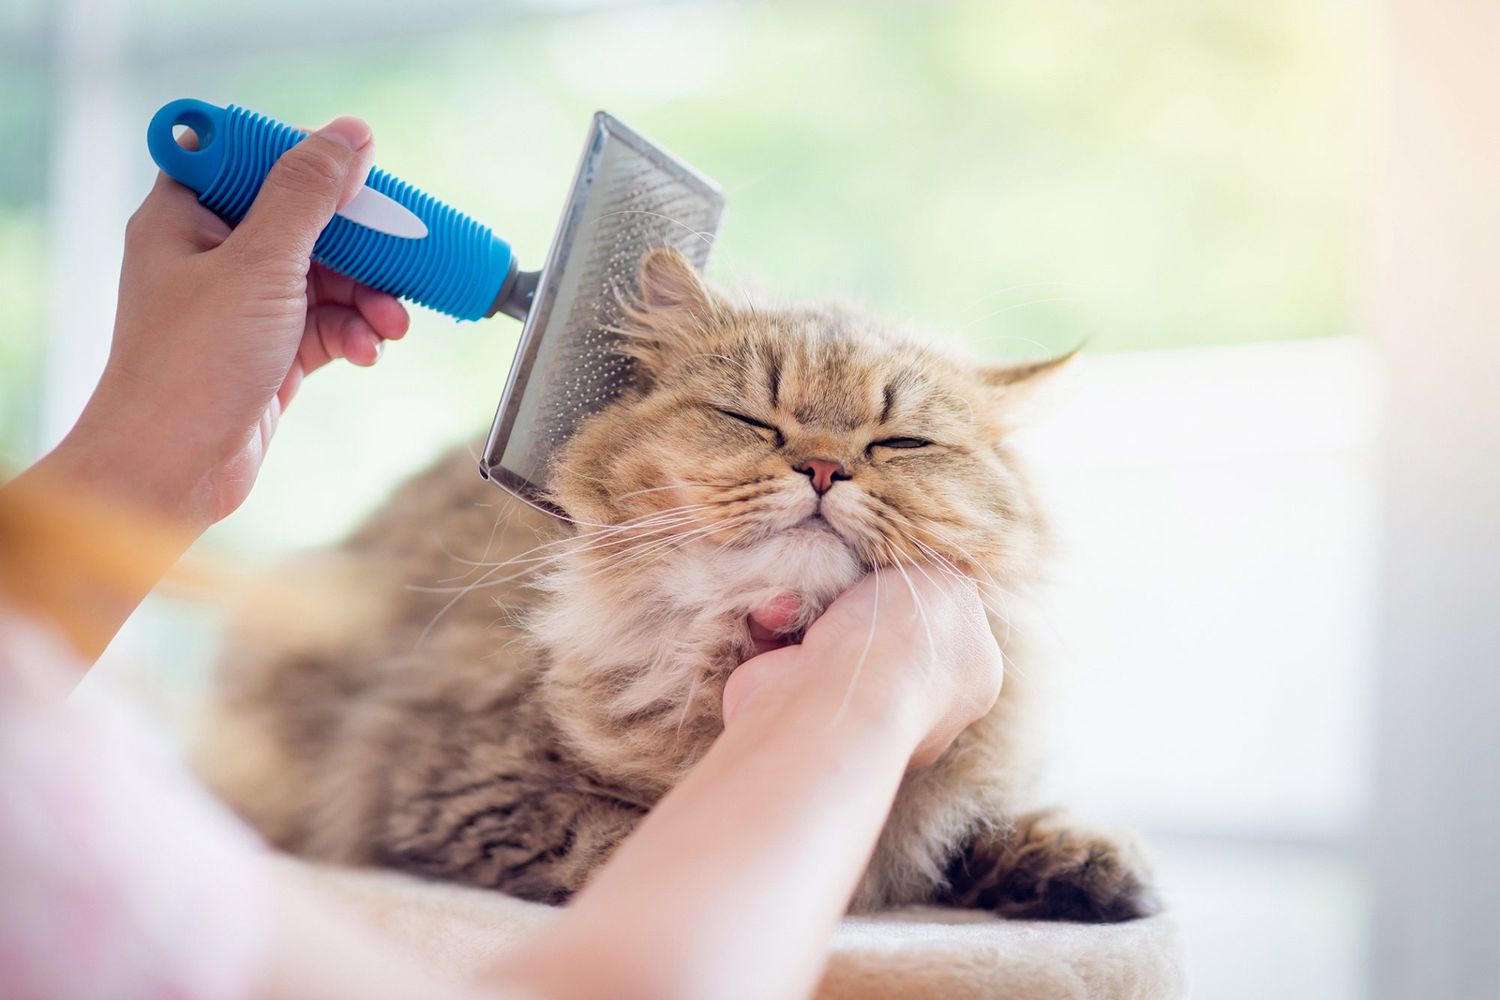 Woman brushing long-haired cat while cat enjoys